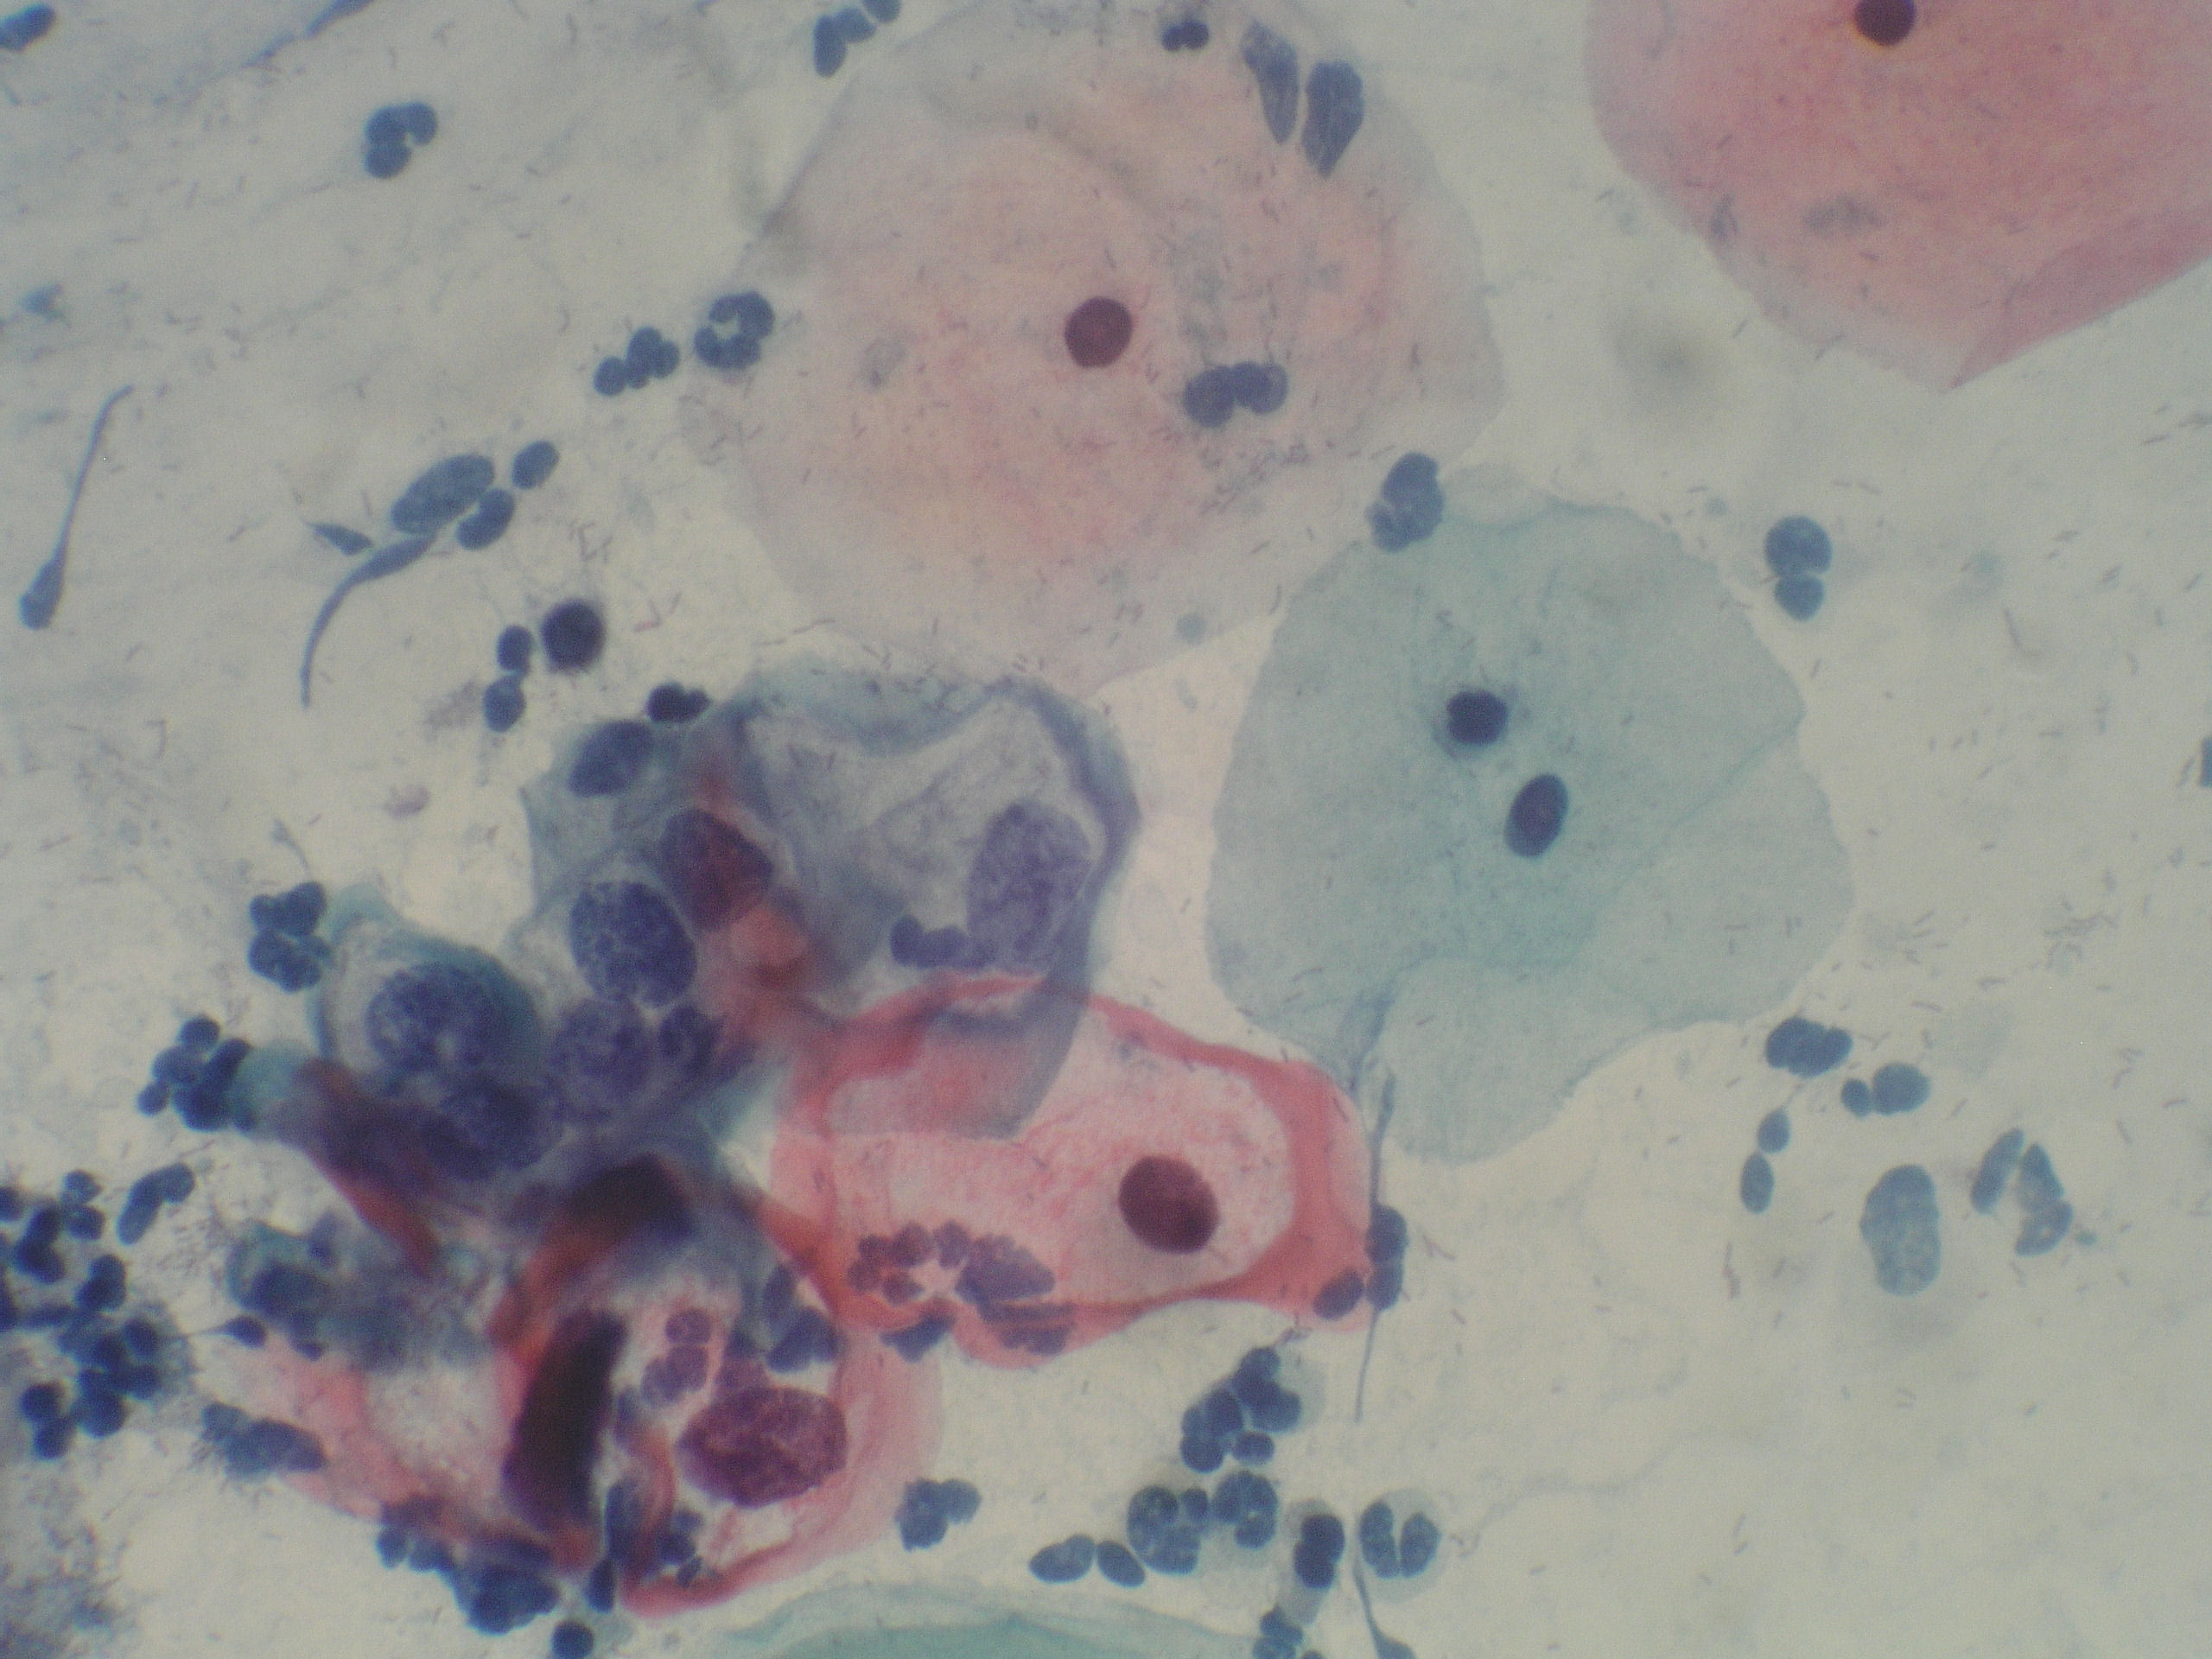 koilocytes 1 a